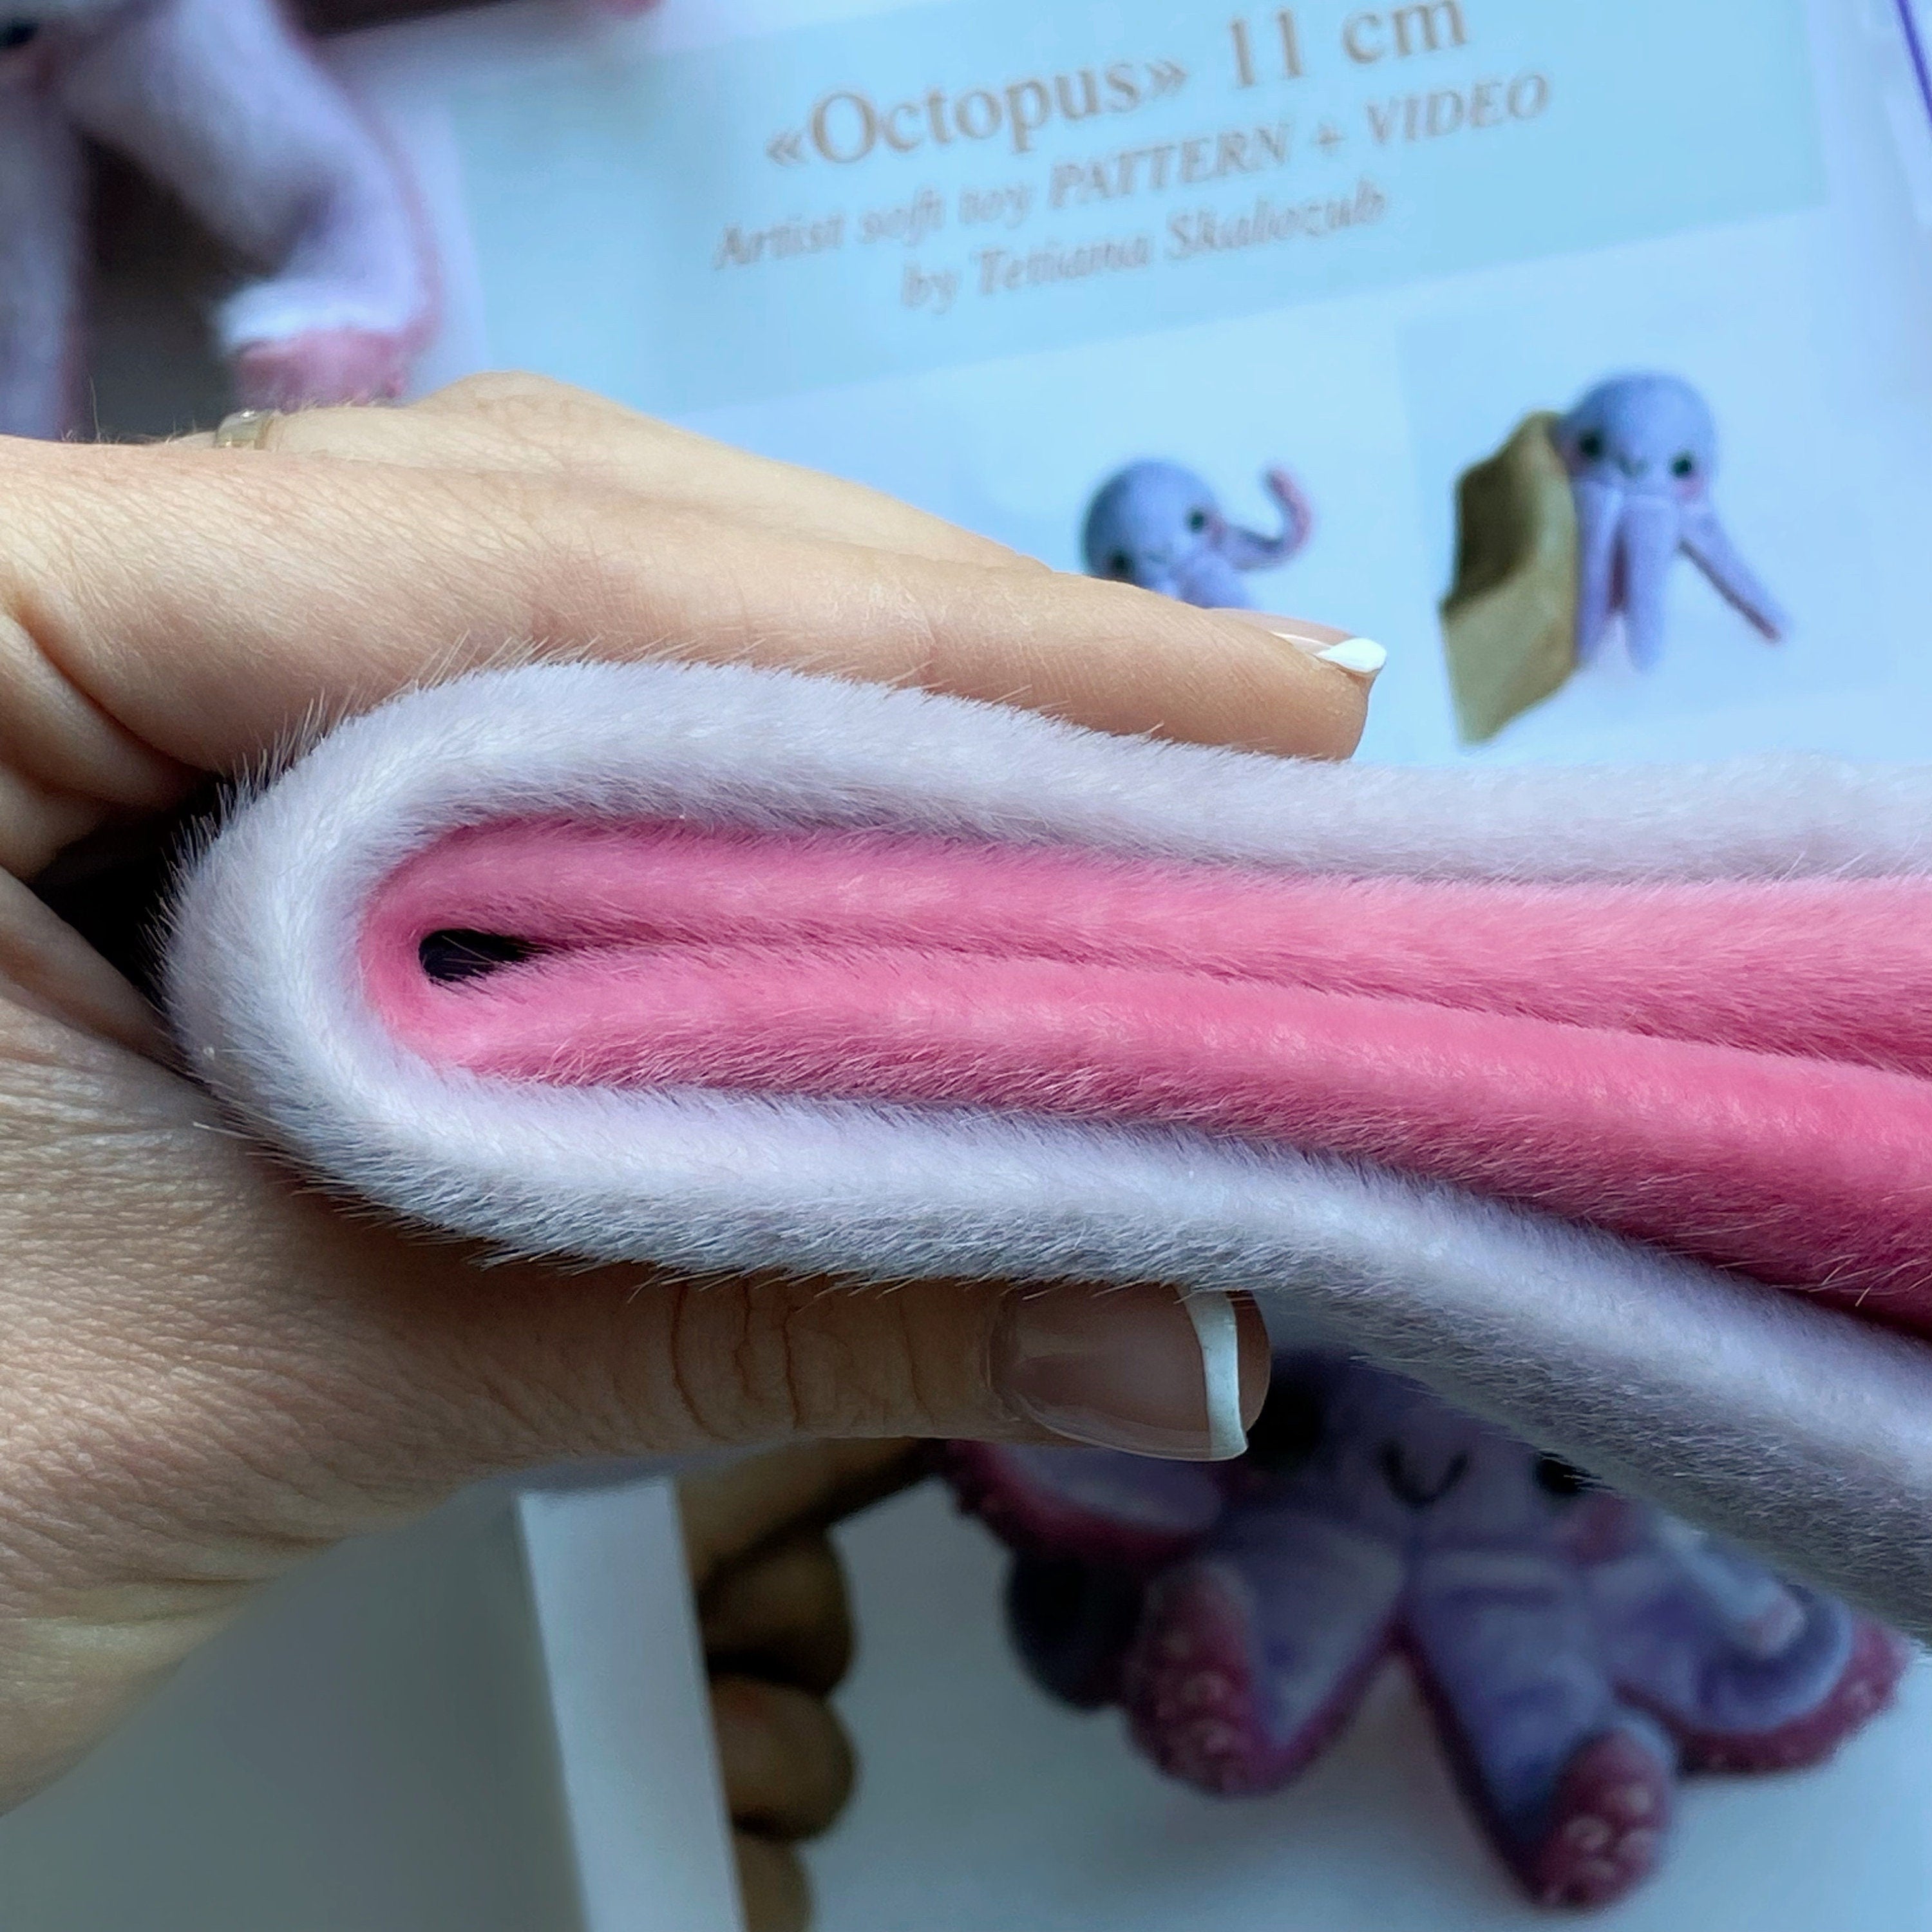 Octopus - Sewing KIT, artist pattern, stuffed toy tutorials, sea animal, soft toy diy craft kit for adults Bestseller TSminibears